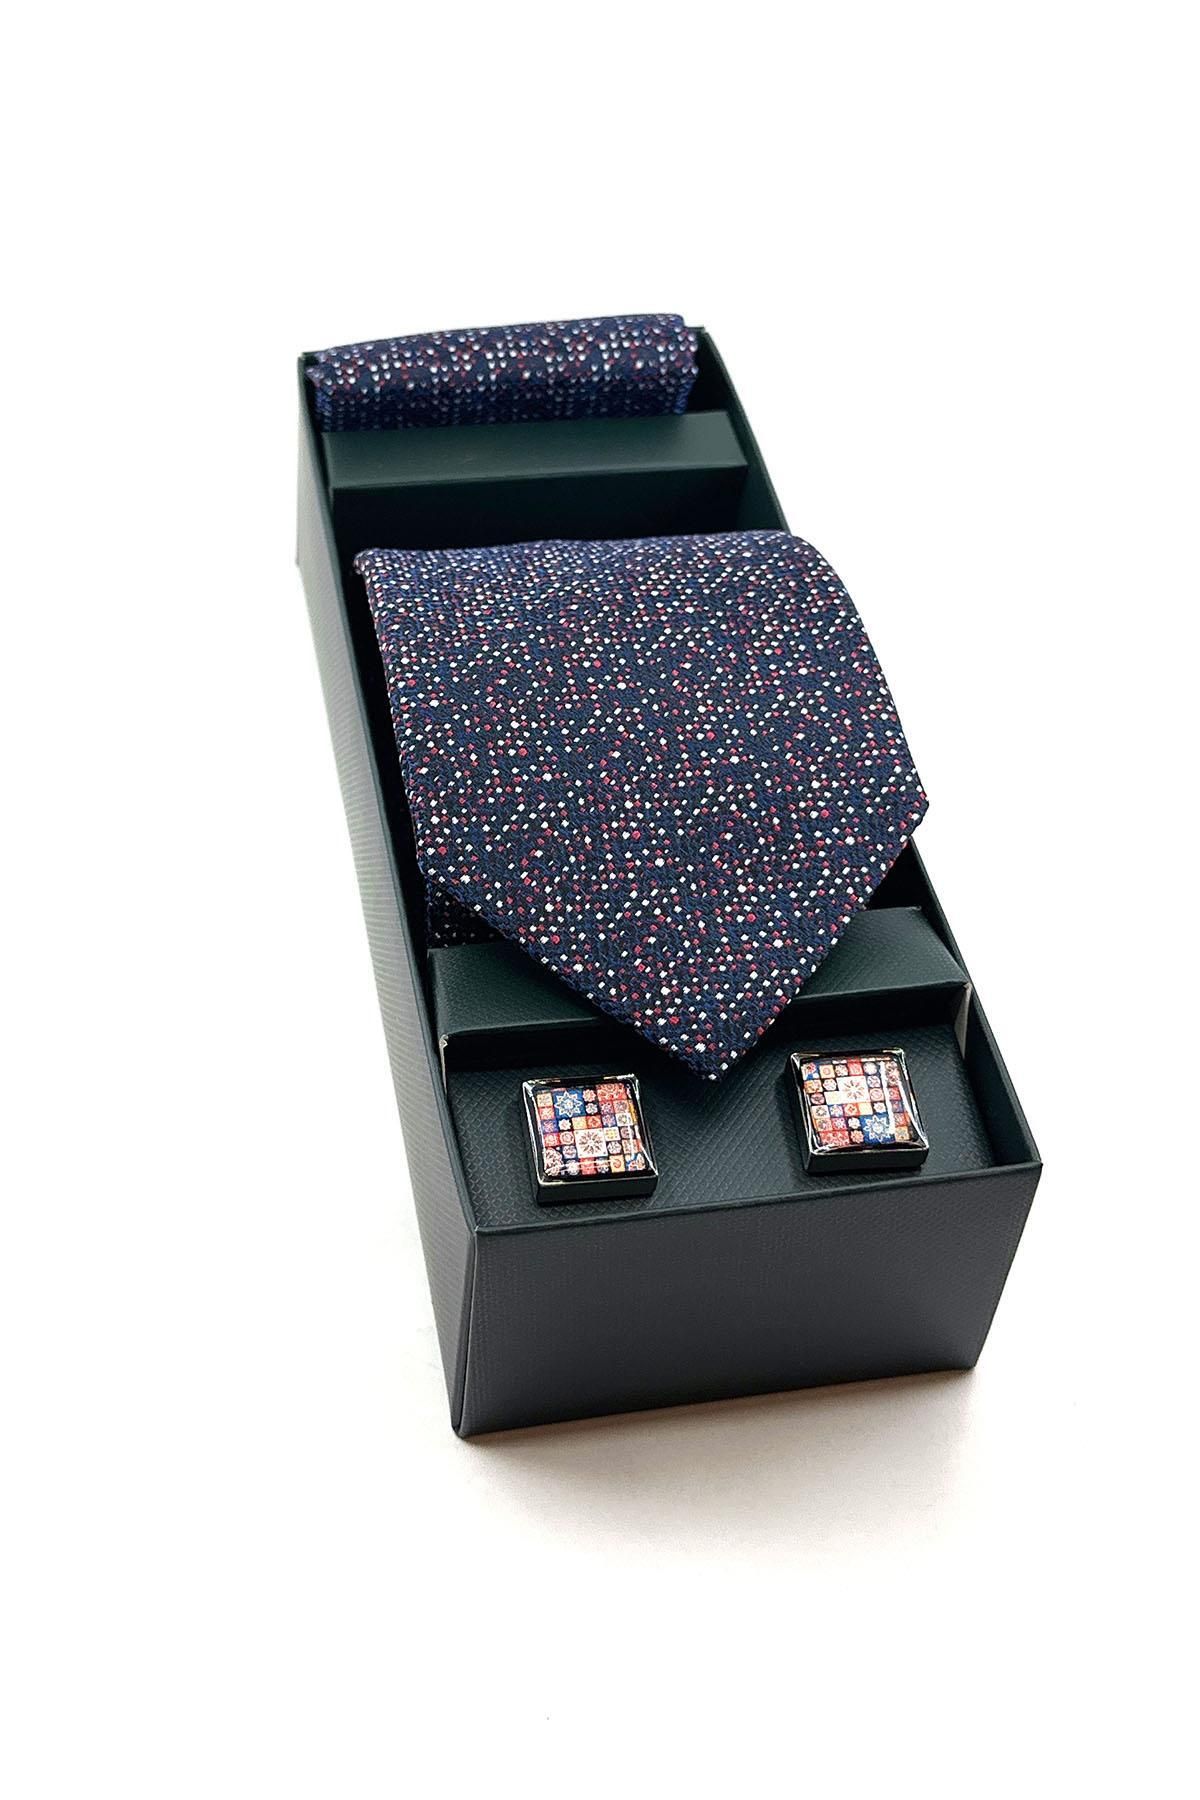 La Pescara Lacivert Mendilli Kravat Çok Renkli Kol Düğmesi Hediye Seti OS519